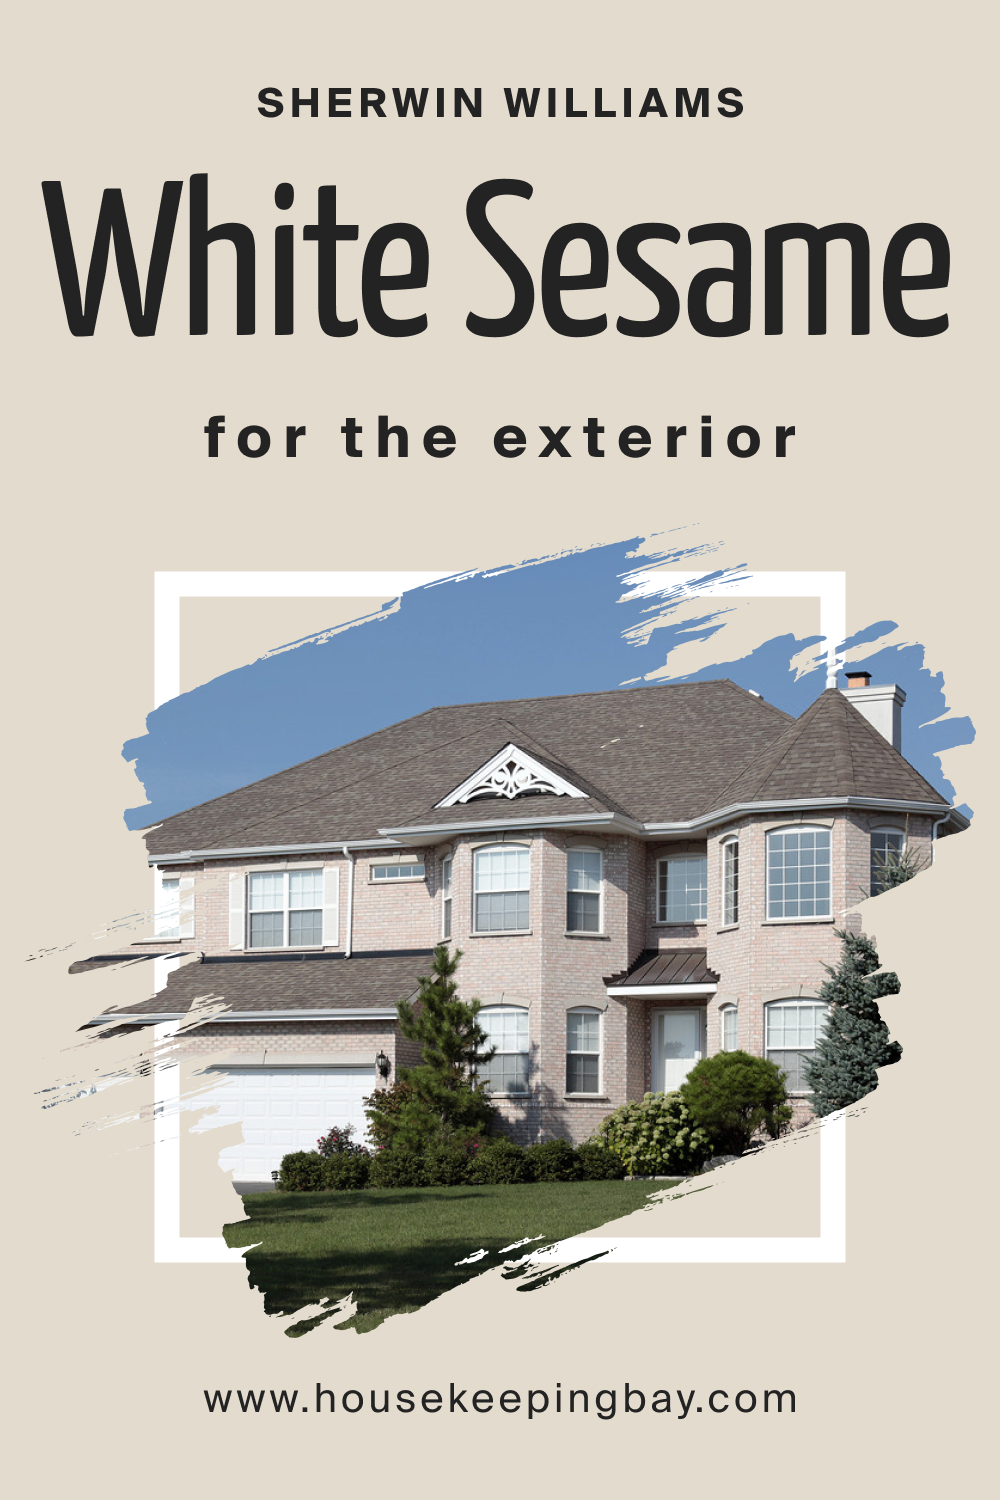 Sherwin Williams. SW 9586 White Sesame For the exterior